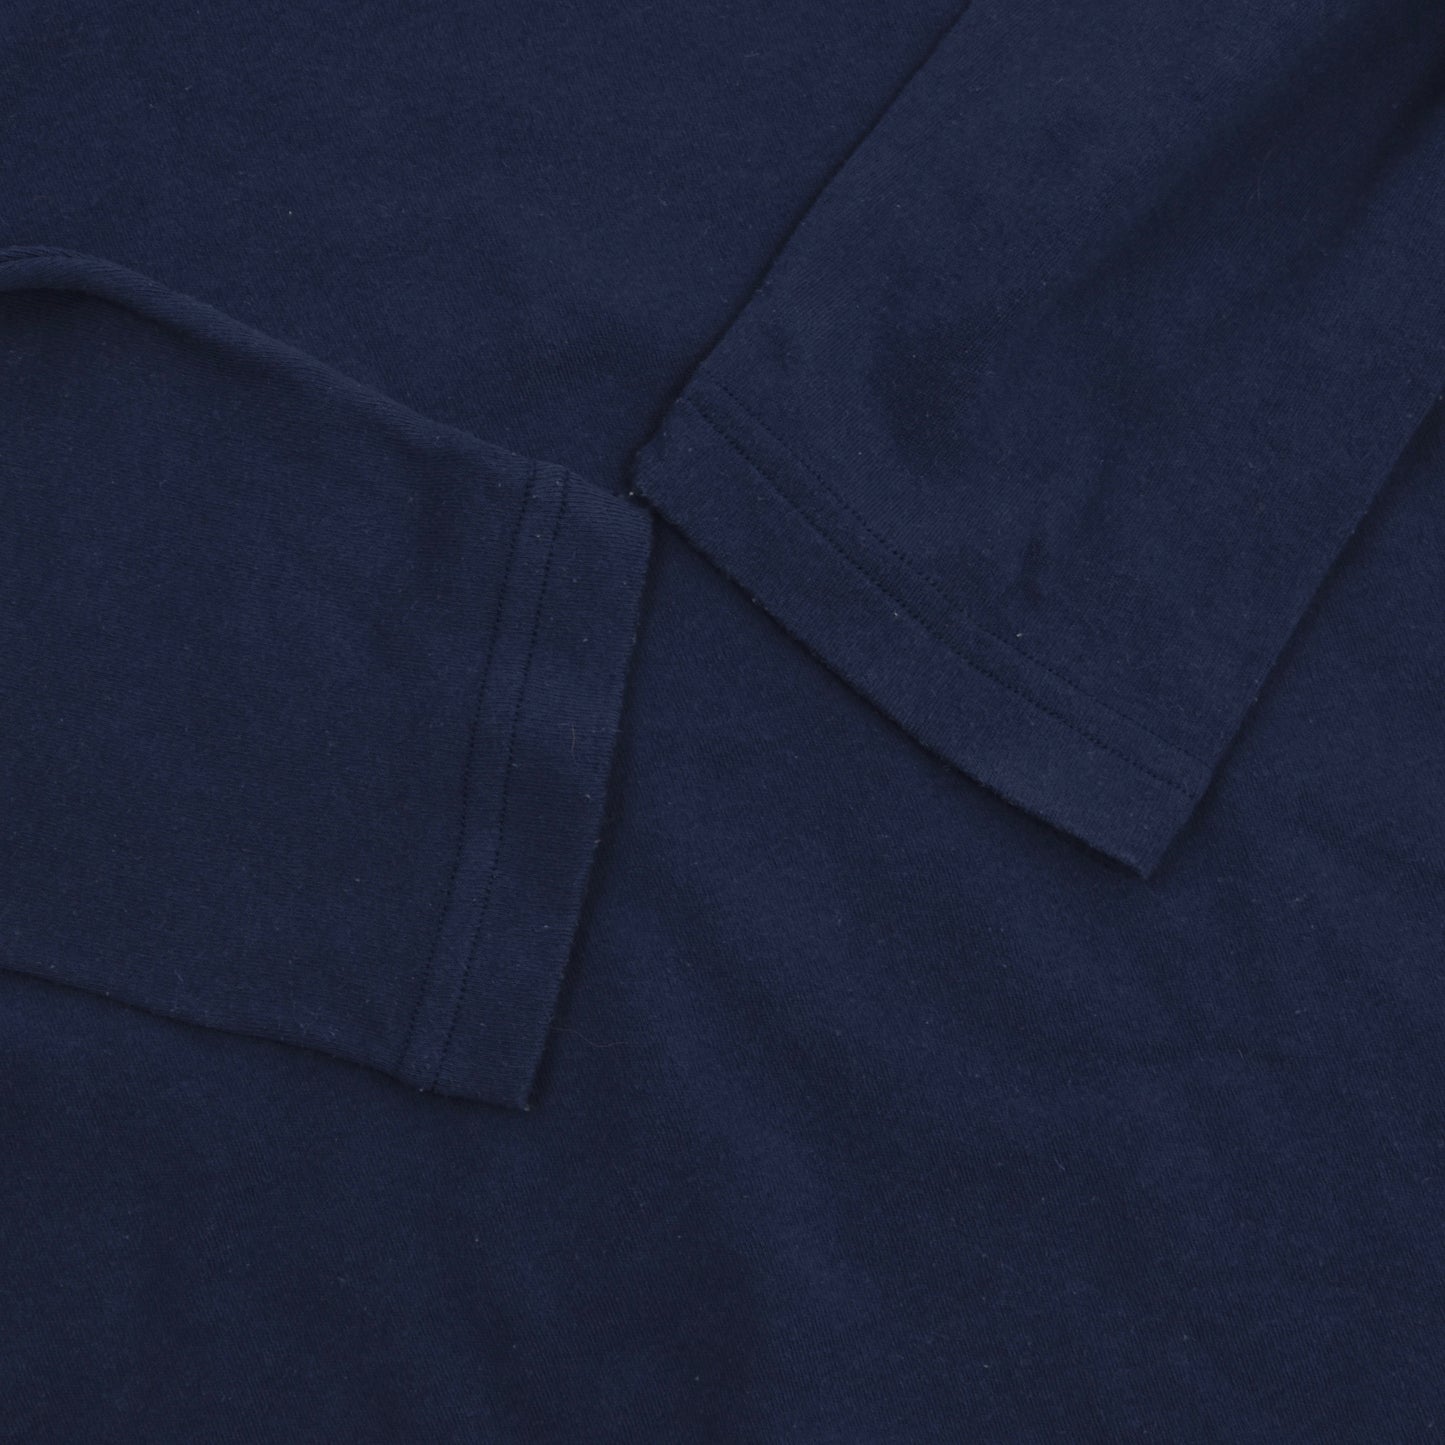 2x Lufthansa First Class/Bogner Cotton Sweatshirts/Tops Size 54/XL - Navy Blue